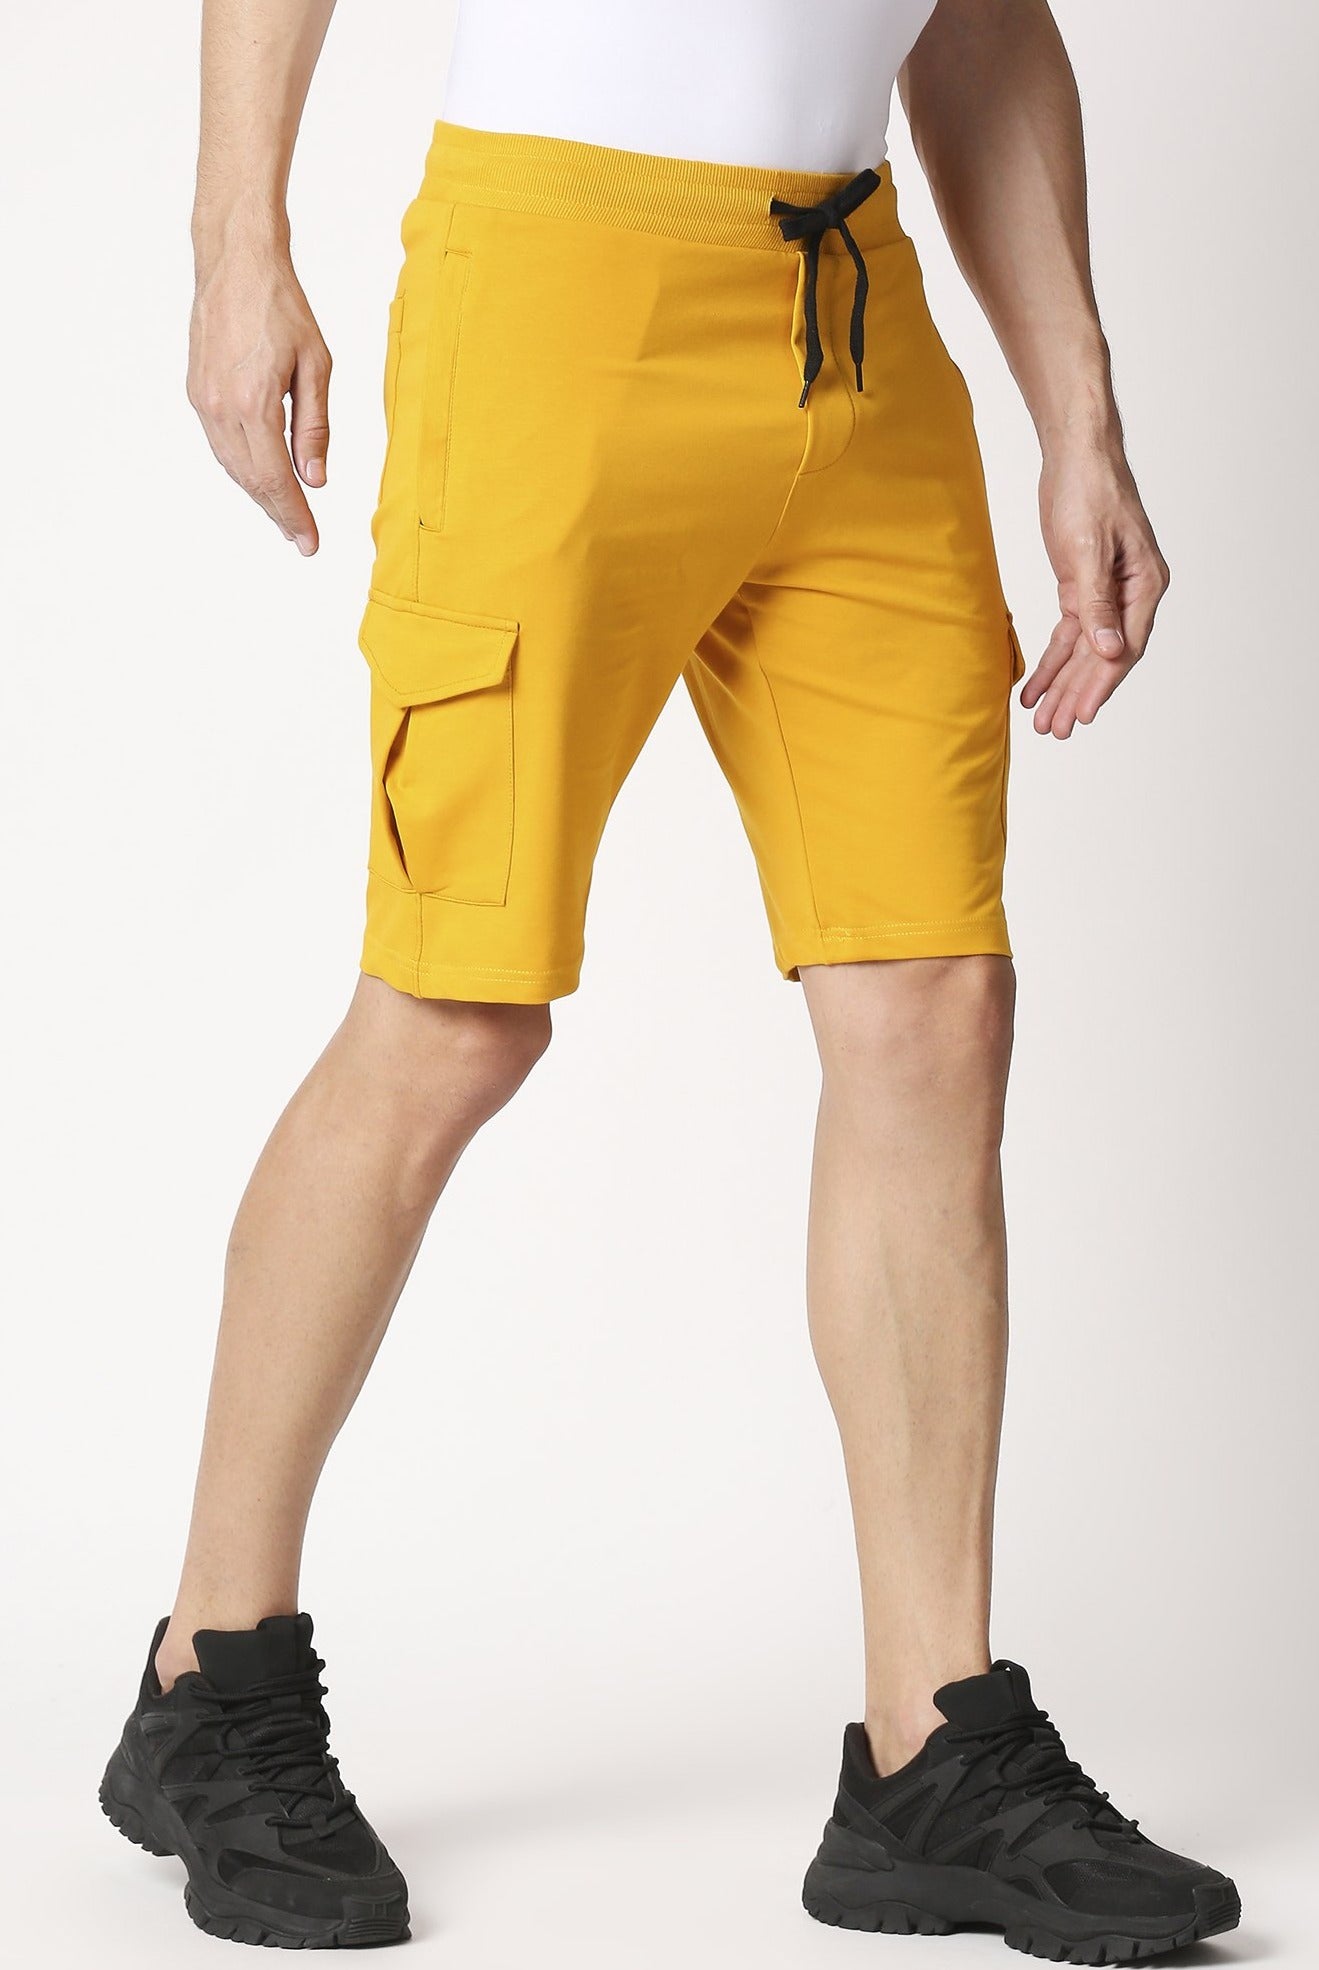 Fostino Victory Yellow Cargo Short - Fostino - Shorts